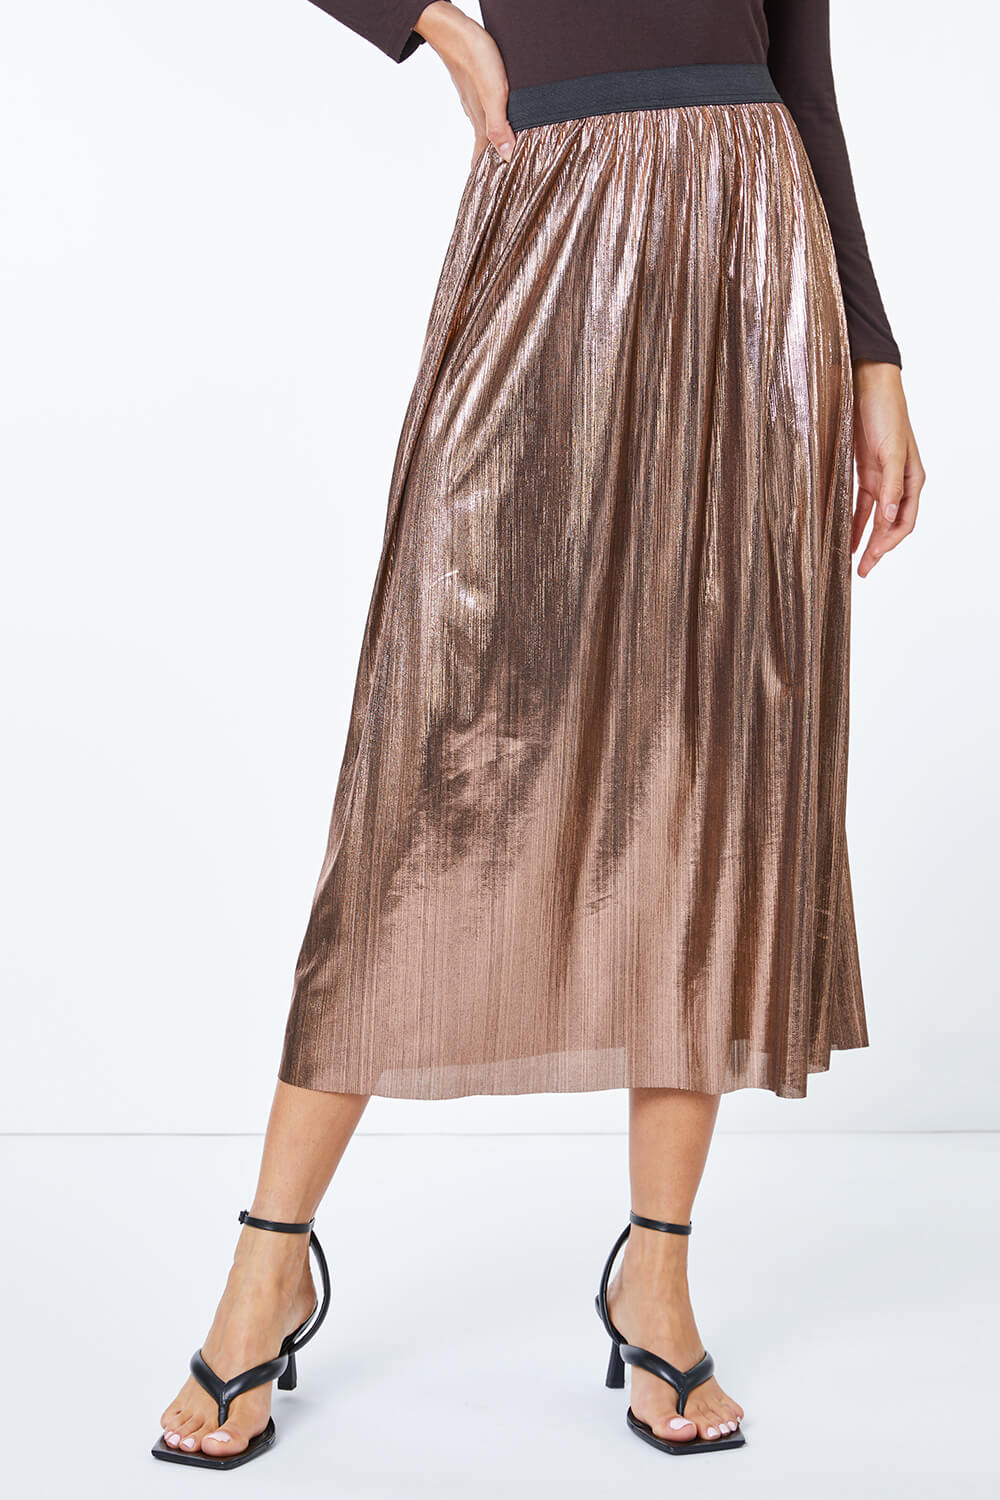 Copper Metallic Shimmer Stretch Midi Skirt, Image 4 of 5